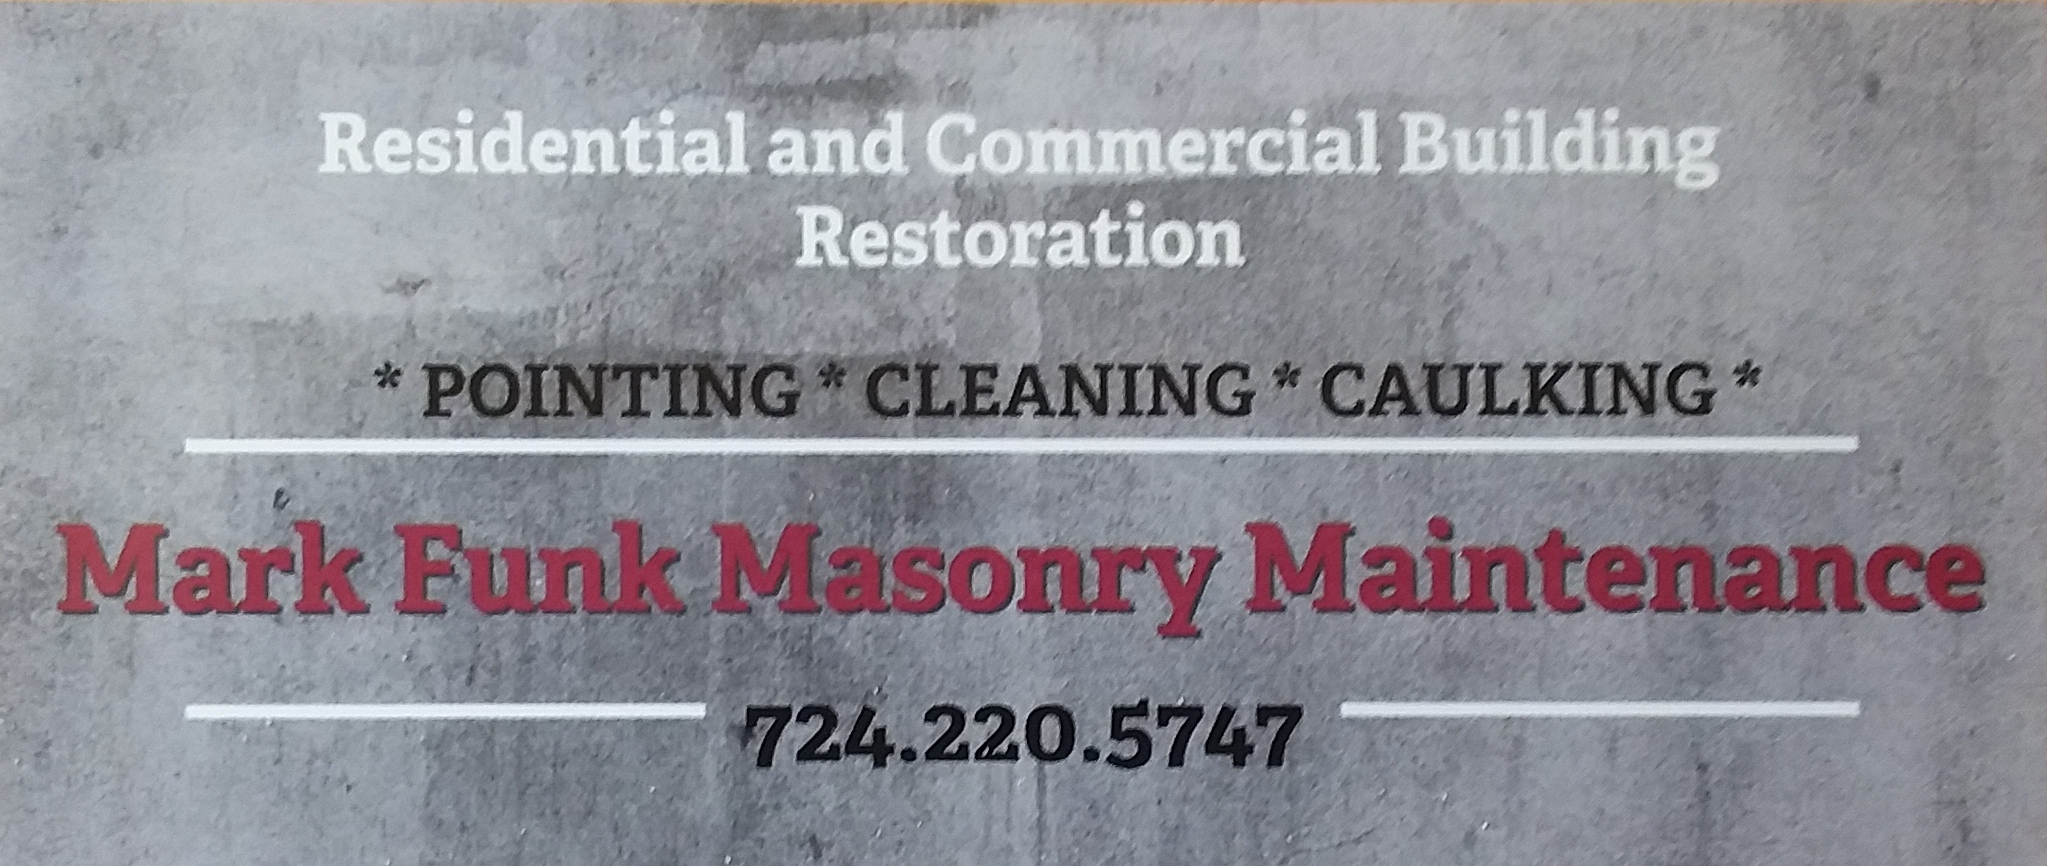 Mark Funk Masonry Maintenance Logo